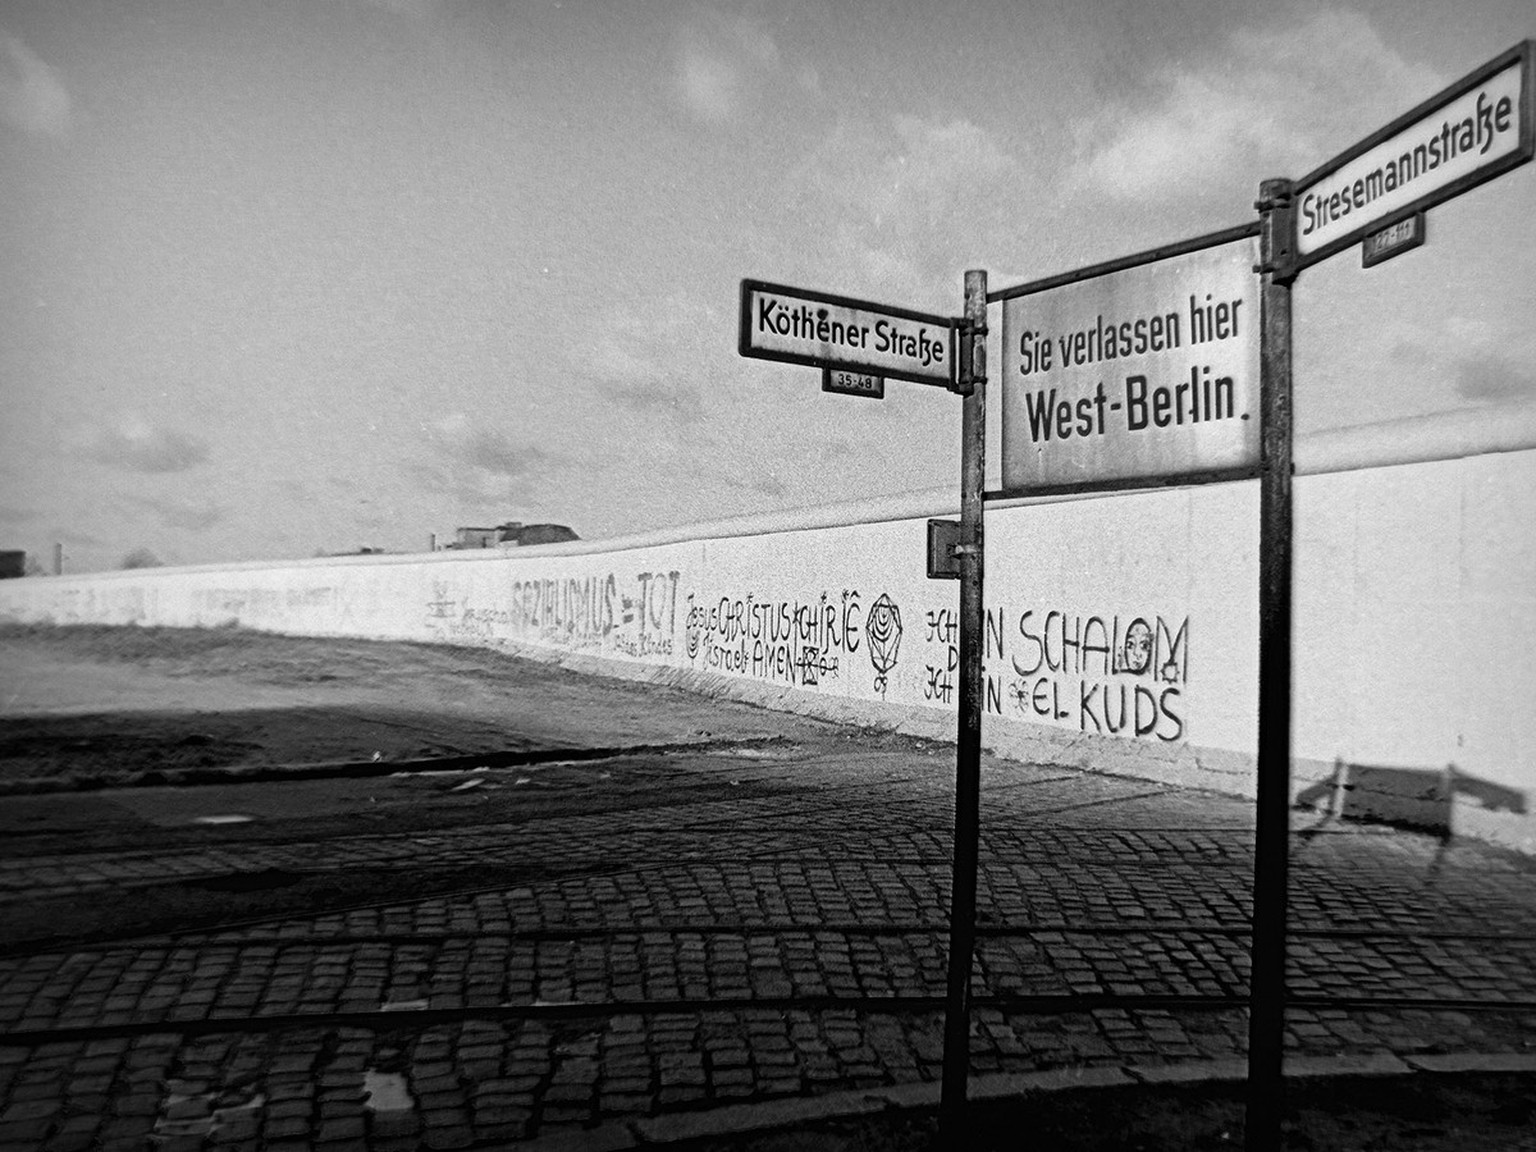 La guerre froide fut territoriale, militaire, mais aussi culturelle.
https://commons.wikimedia.org/wiki/File:Berlin_Wall_(15578589578).jpg